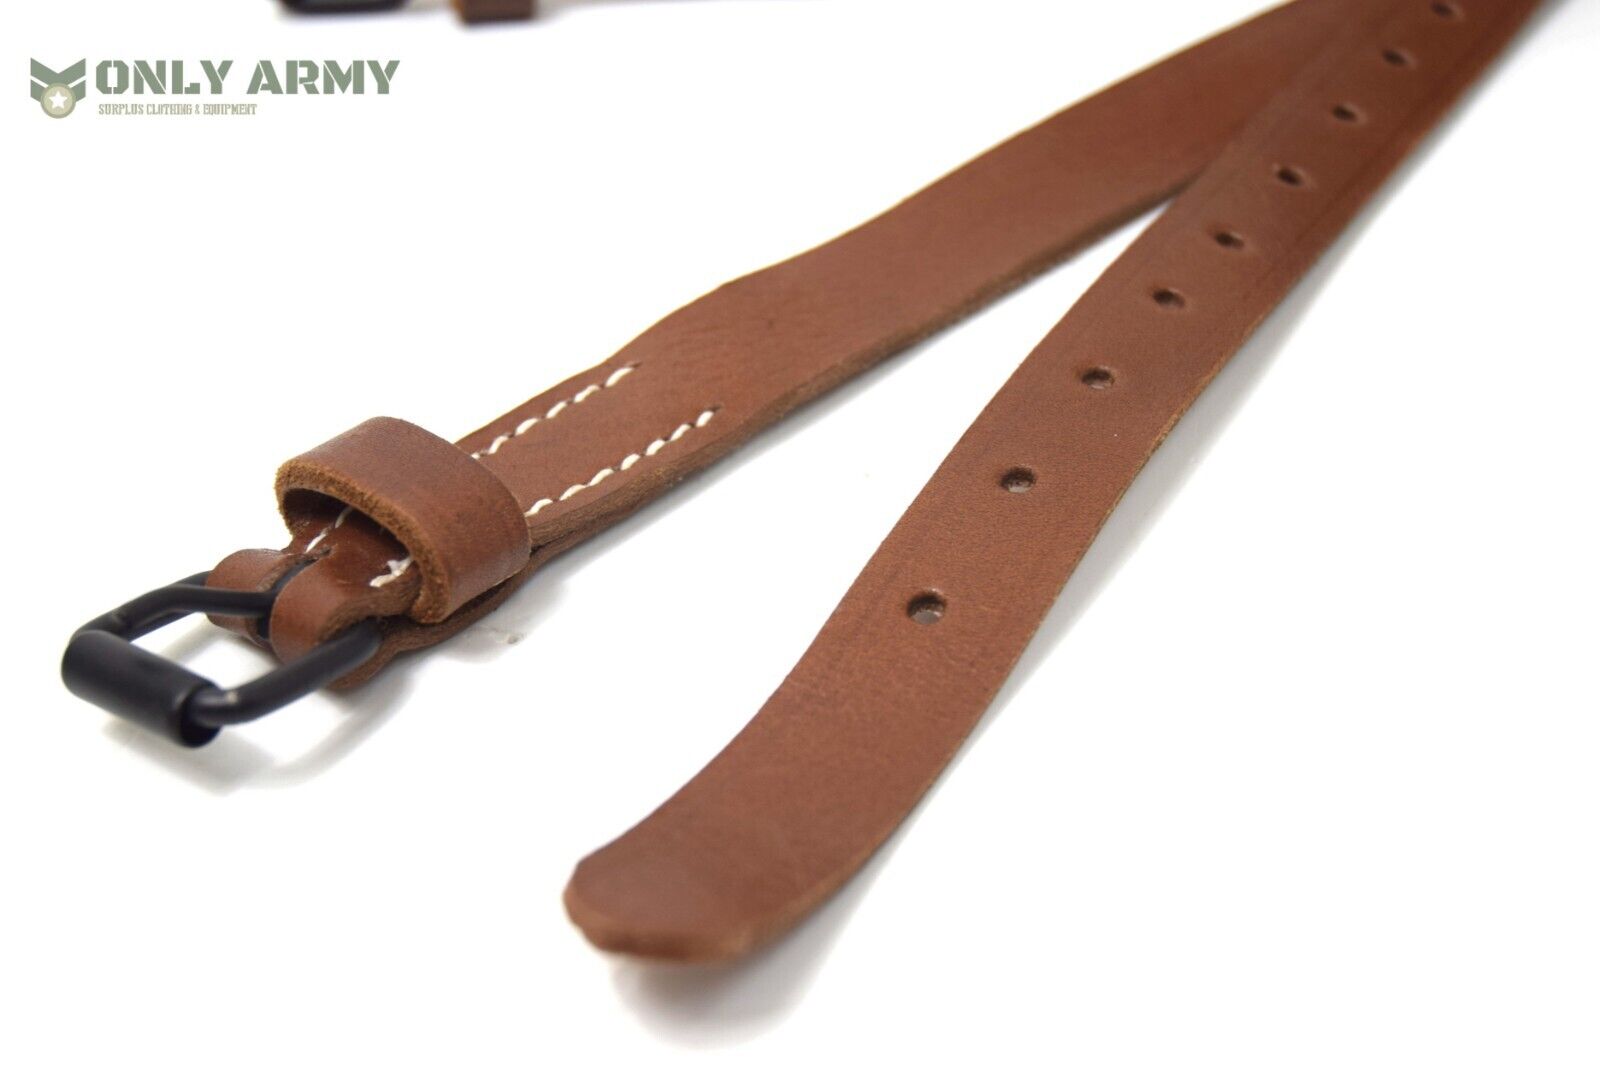 Vintage Swiss Army Leather Utility Strap Belt Blanket Tie Down General Purpose